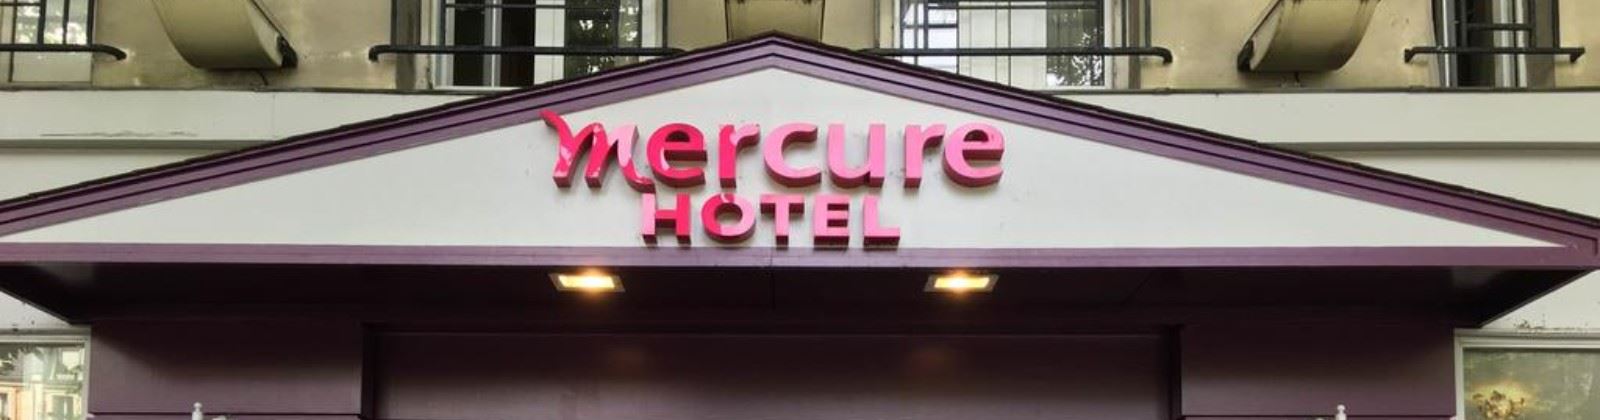 OLEVENE image - mercure-paris-place-d-italie-olevene-hotel-restaurant-conference-